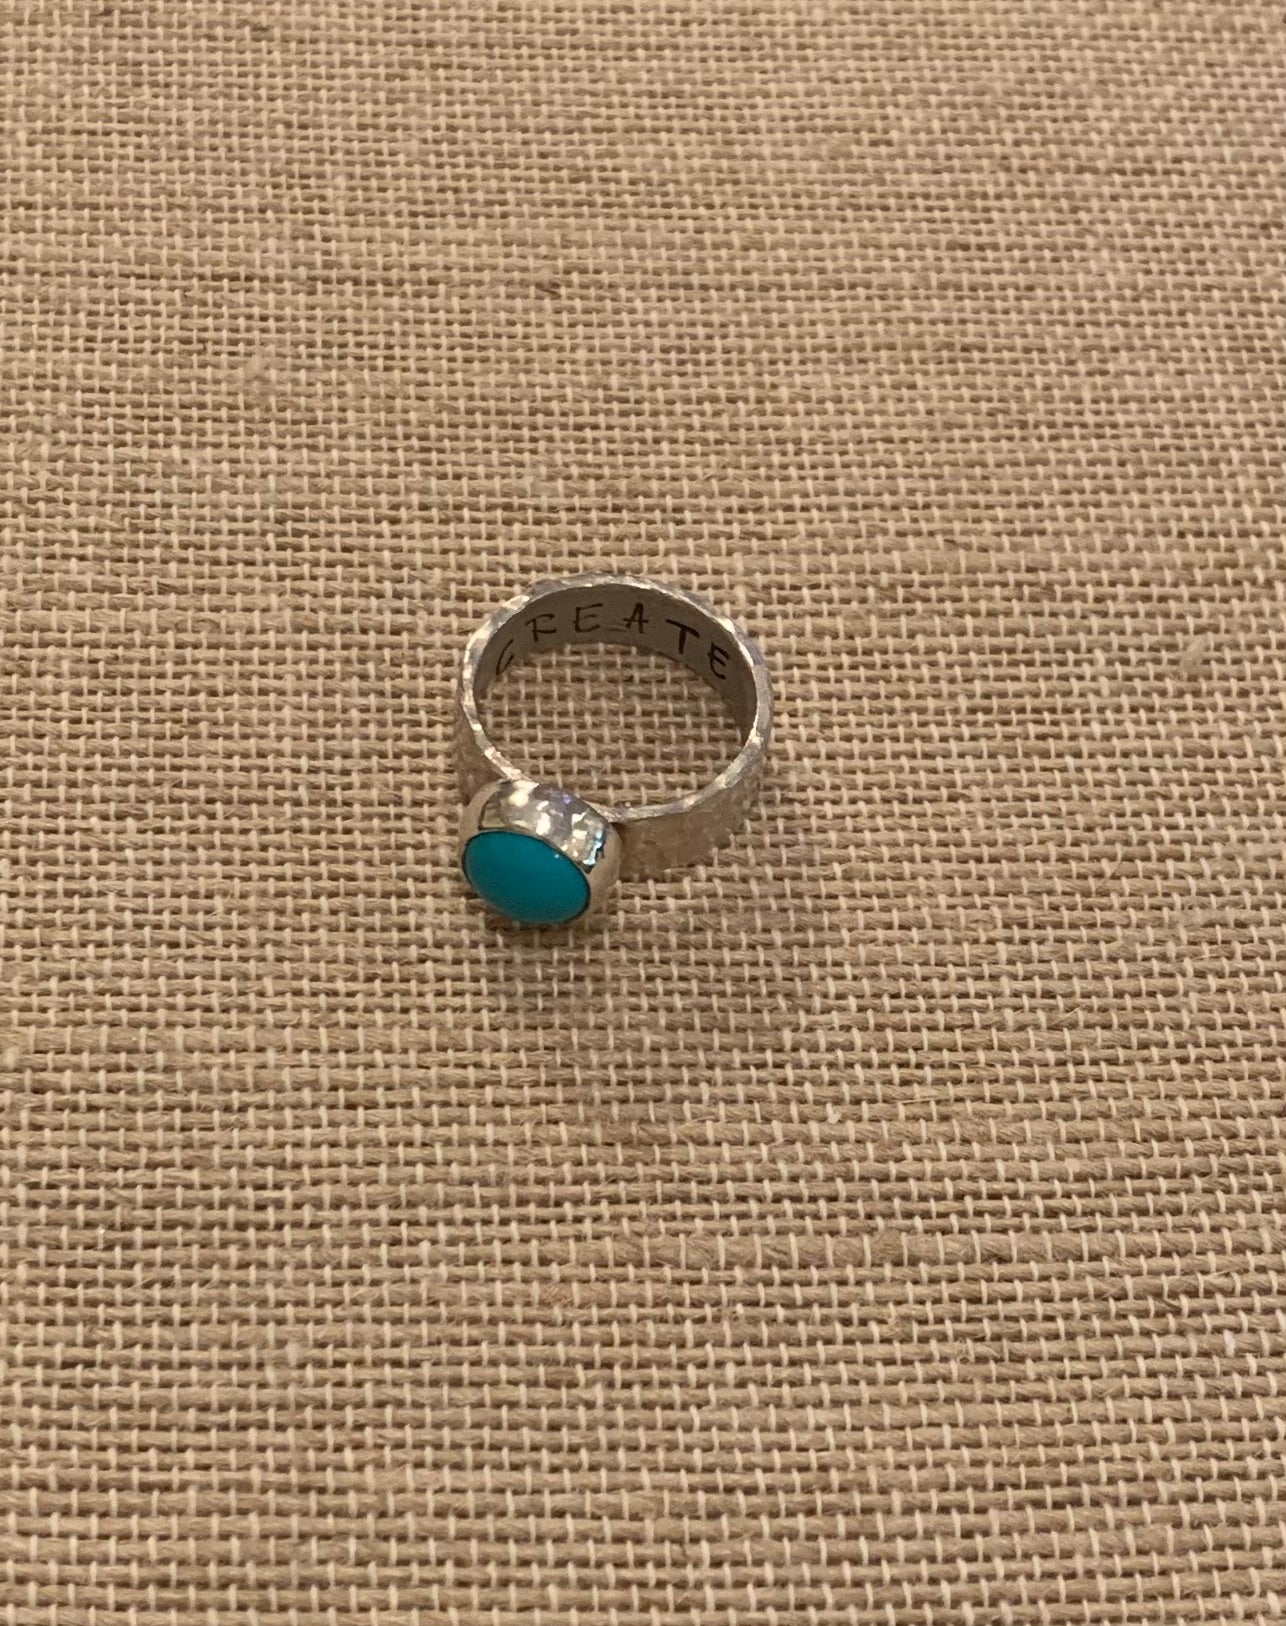 Shea Designs Sleeping Beauty Turquoise Ring